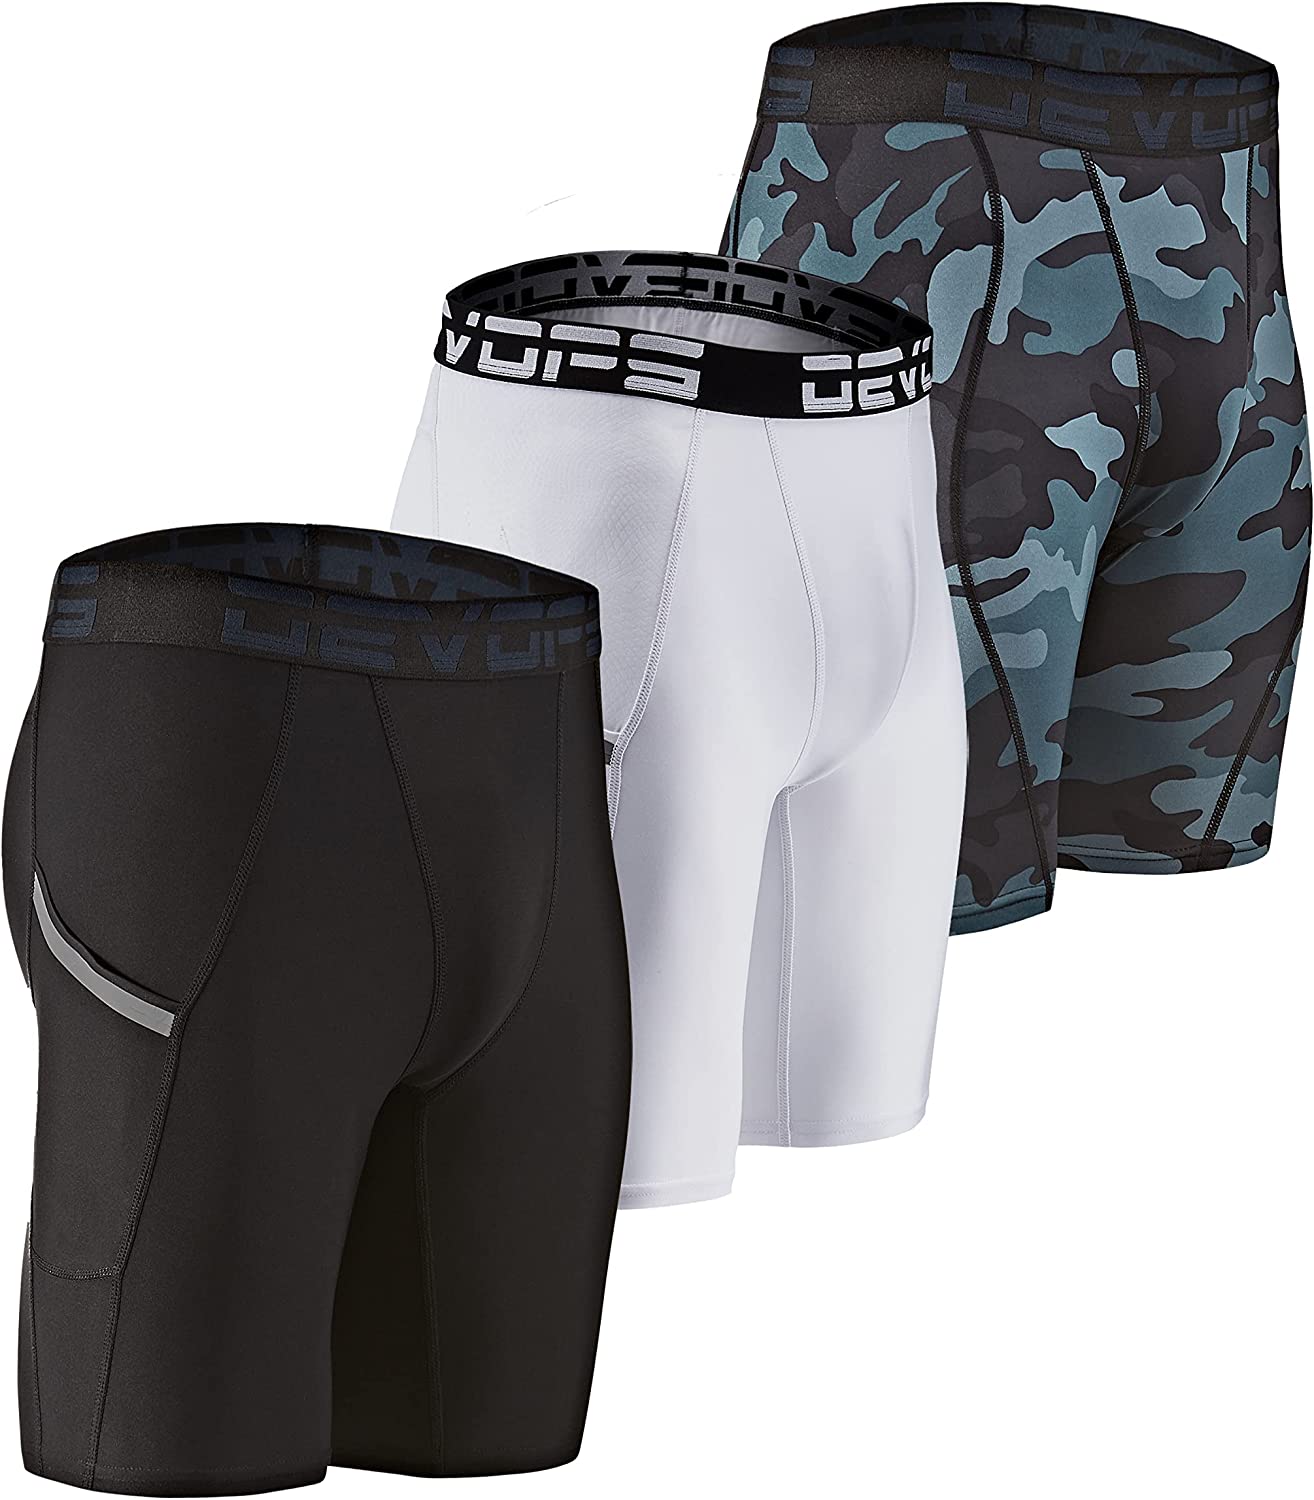 3 Pack DEVOPS Men's Compression Shorts Underwear